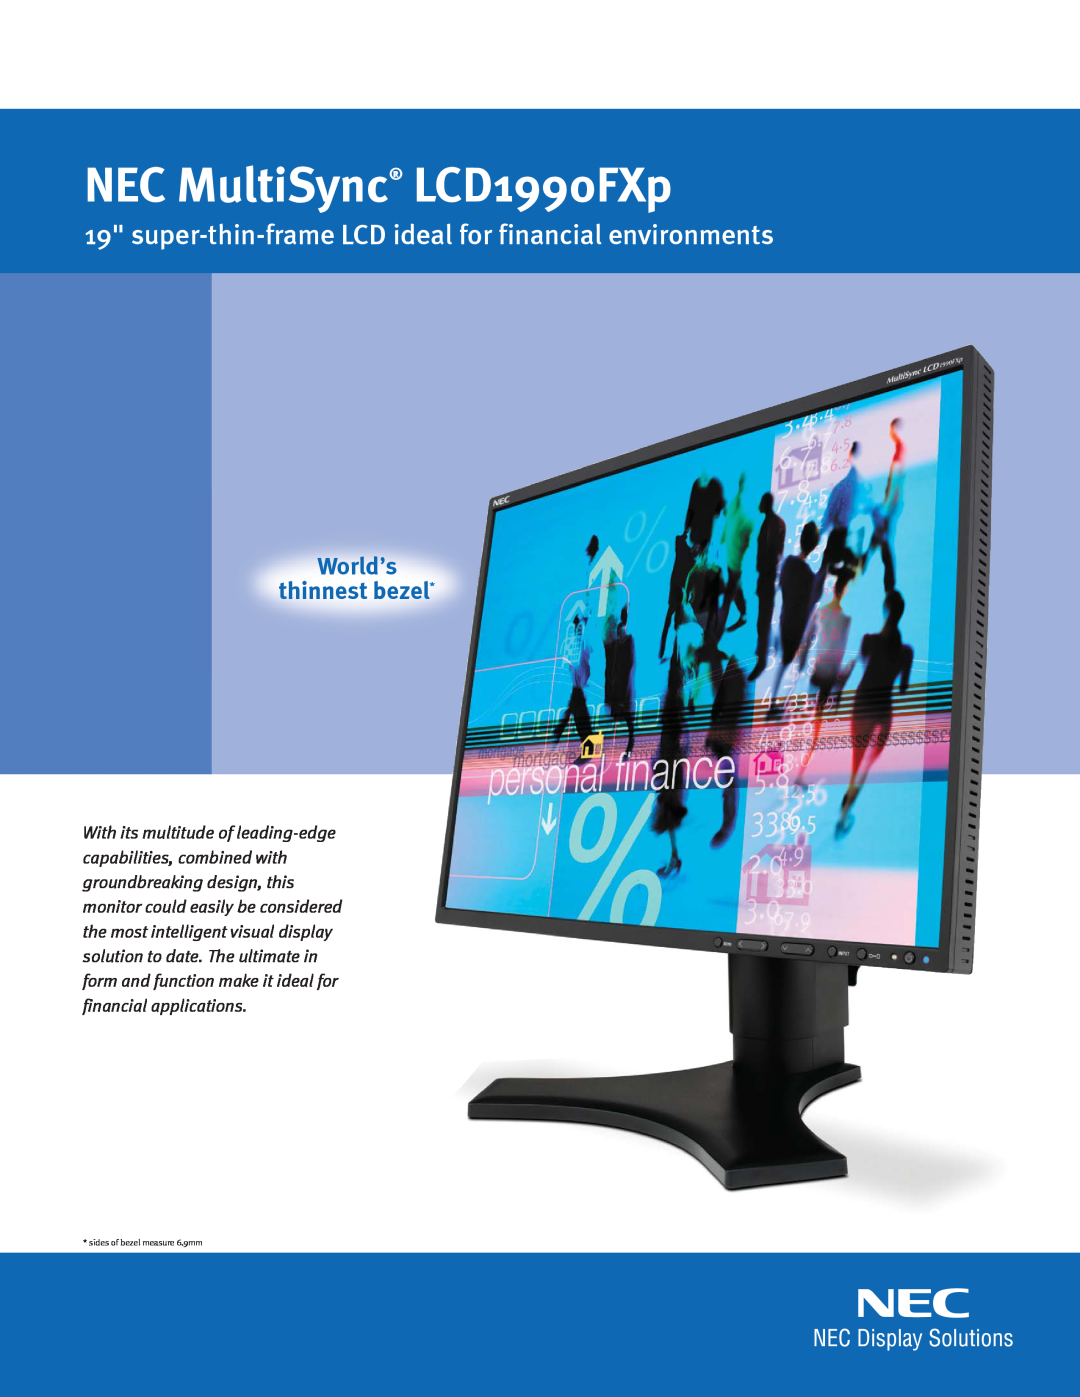 NEC manual NEC MultiSync LCD1990FXp, World’s thinnest bezel 